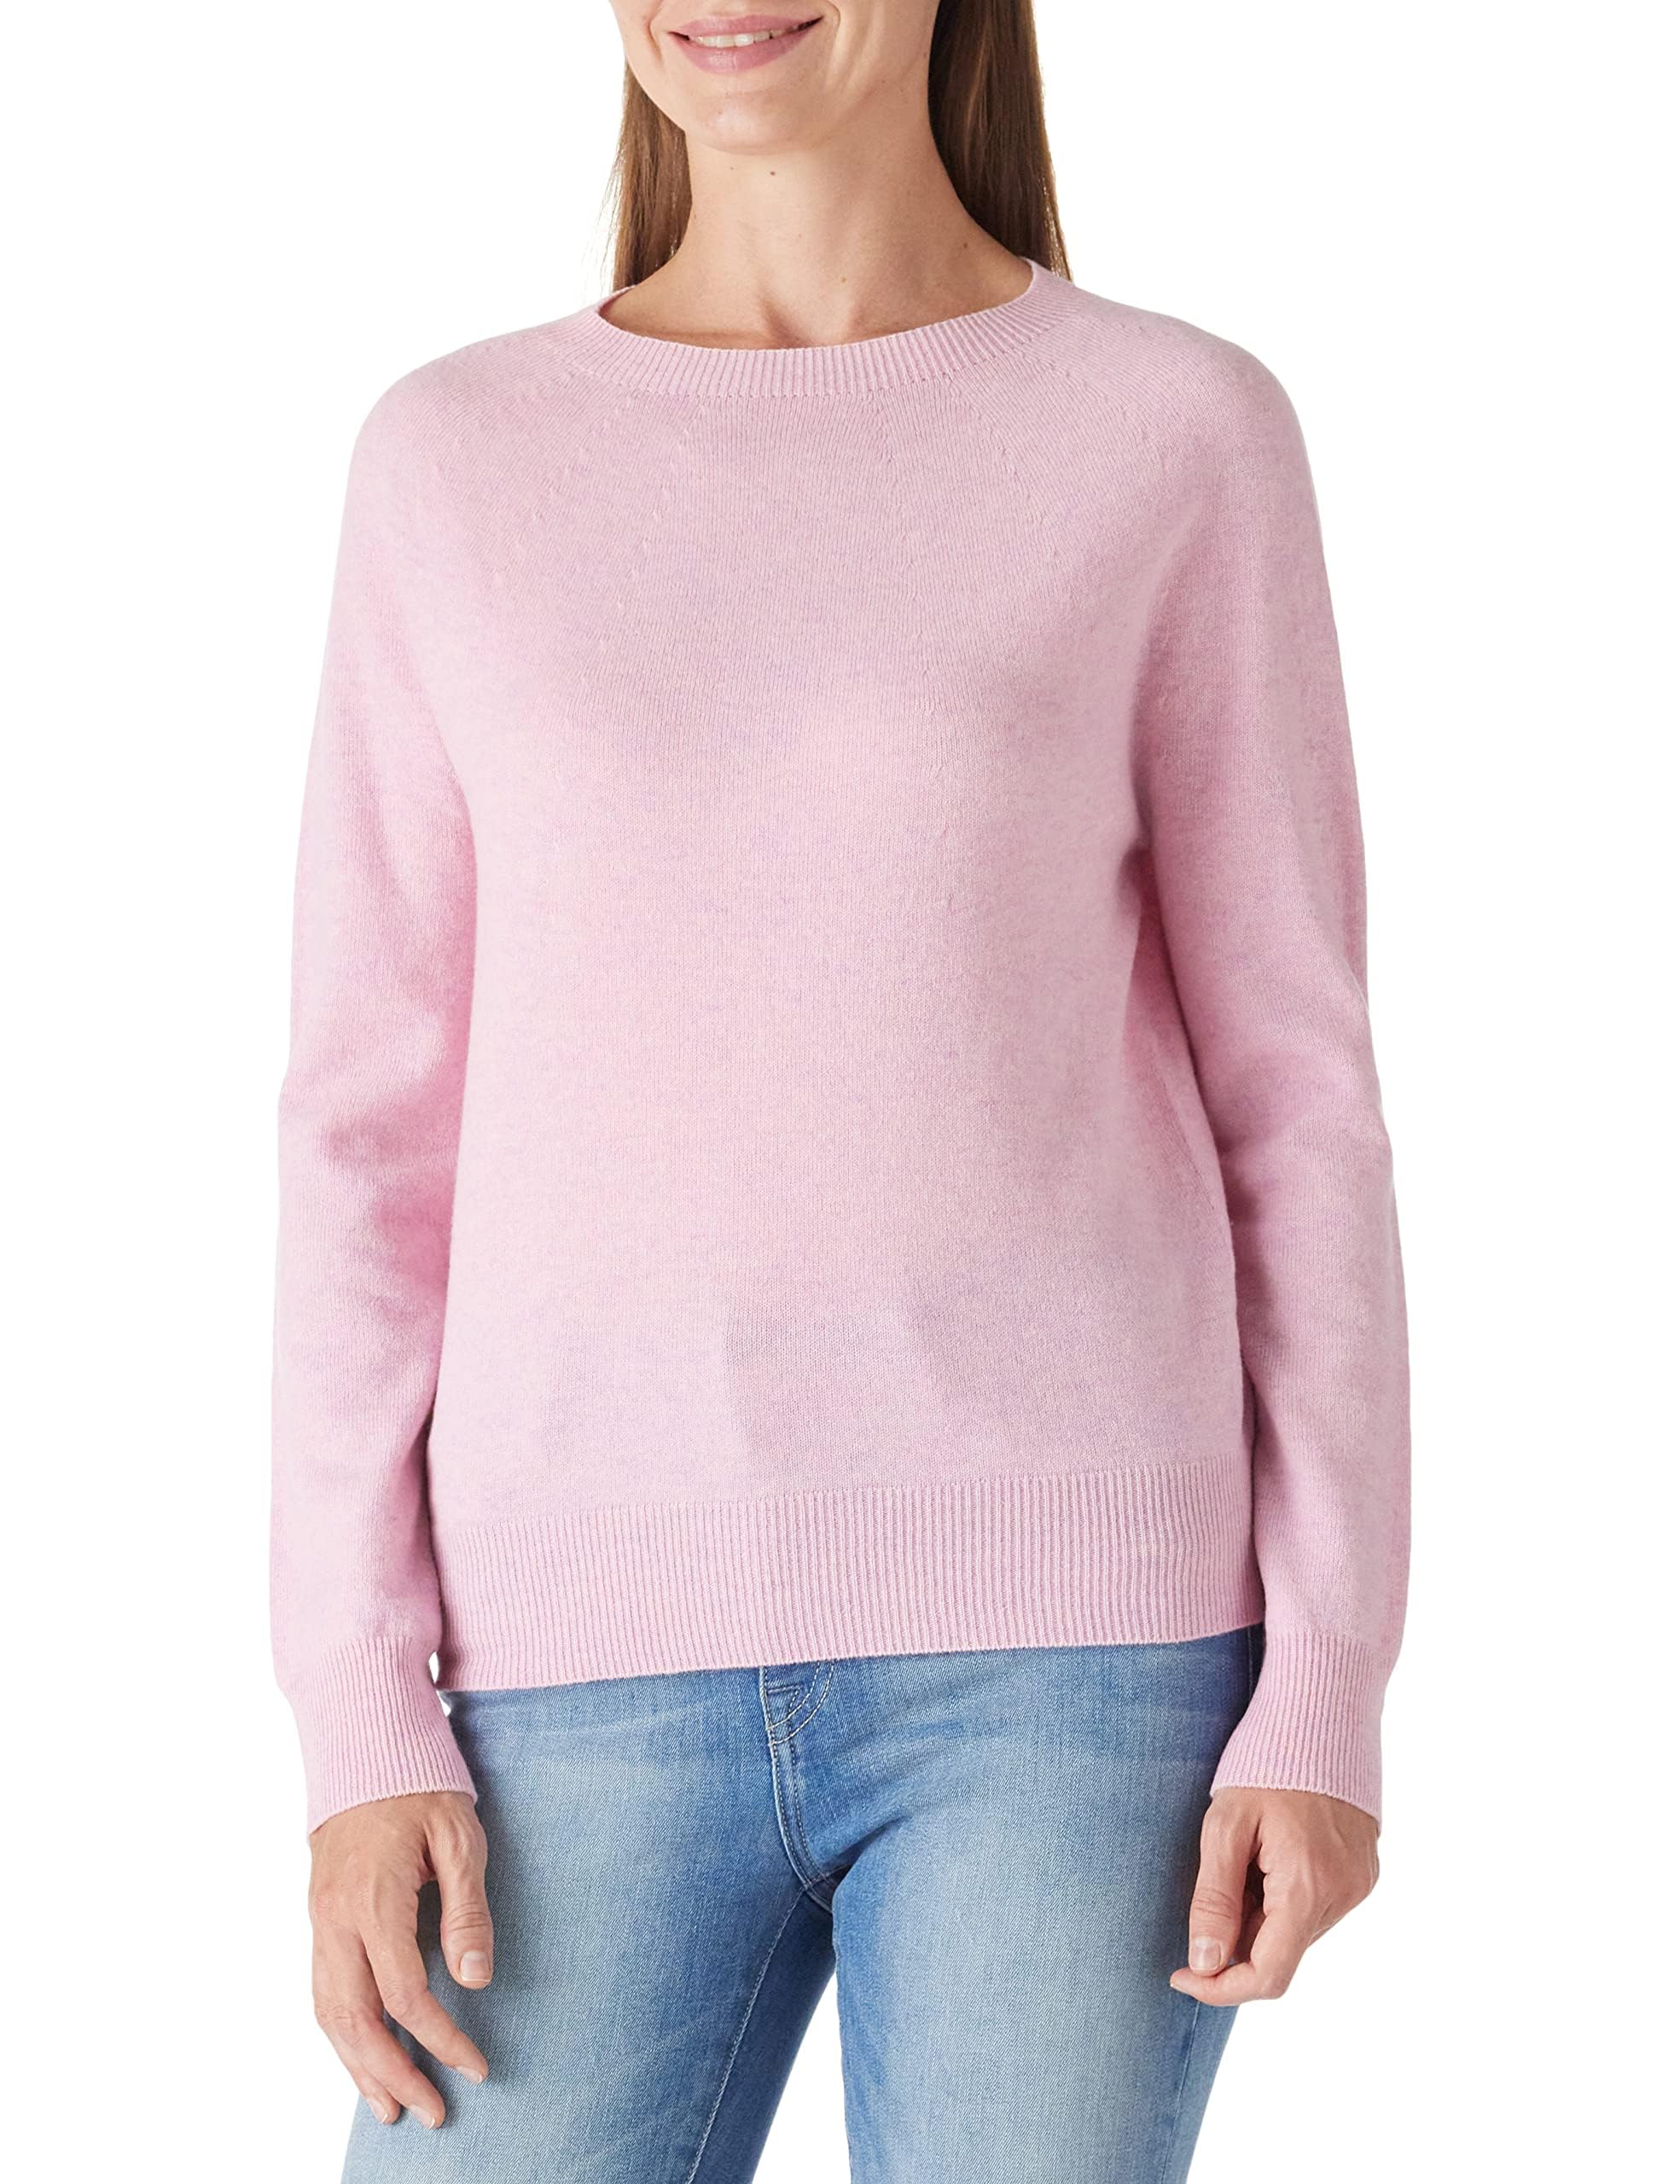 HIKARO Women's 100% Merino Wool Sweater Seamless Cowl Neck Long Sleeve Pullover (Pink, Large)